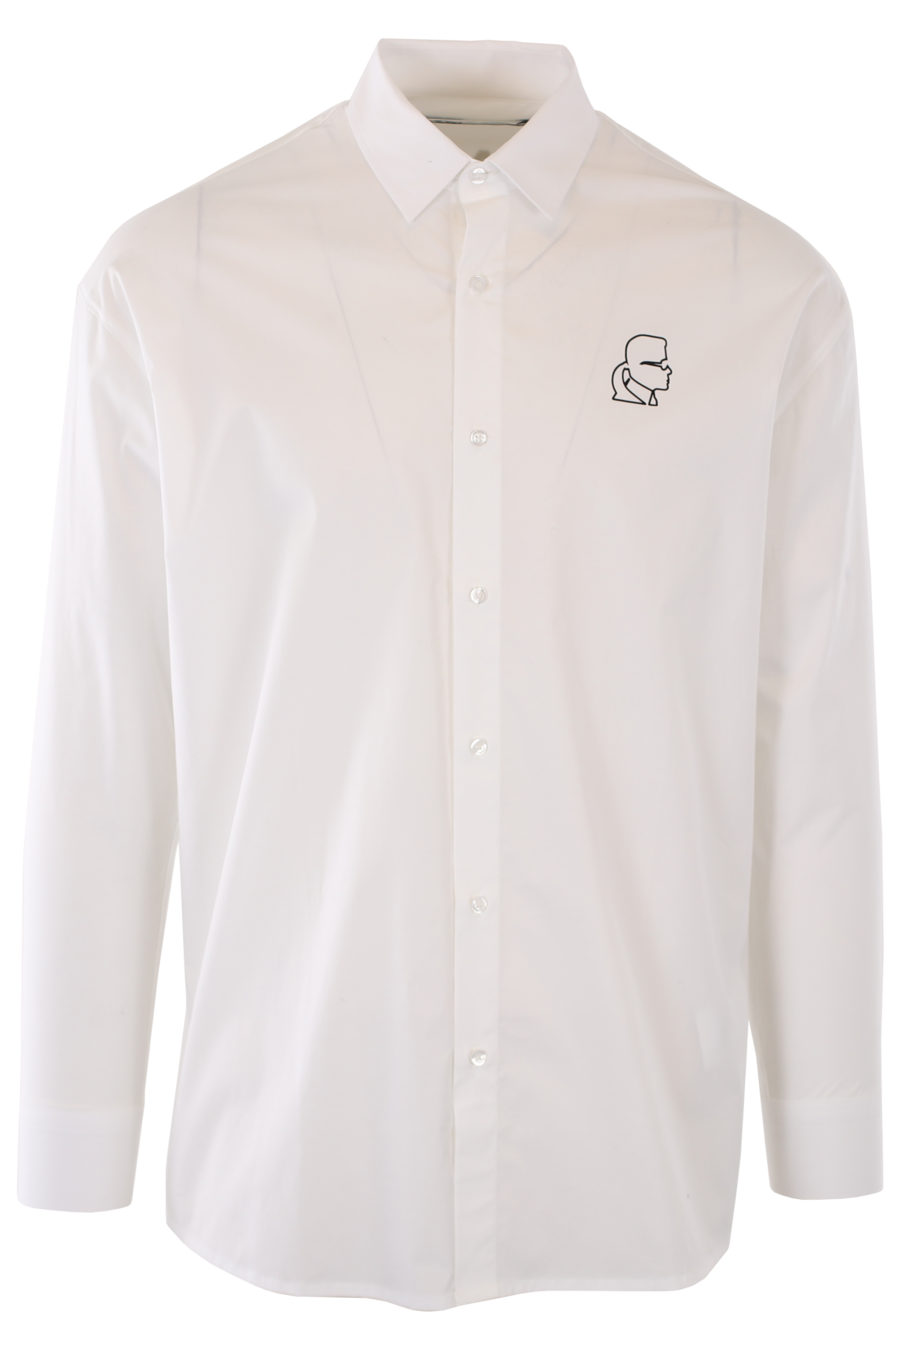 White shirt with black logo and satin detail - IMG 1142